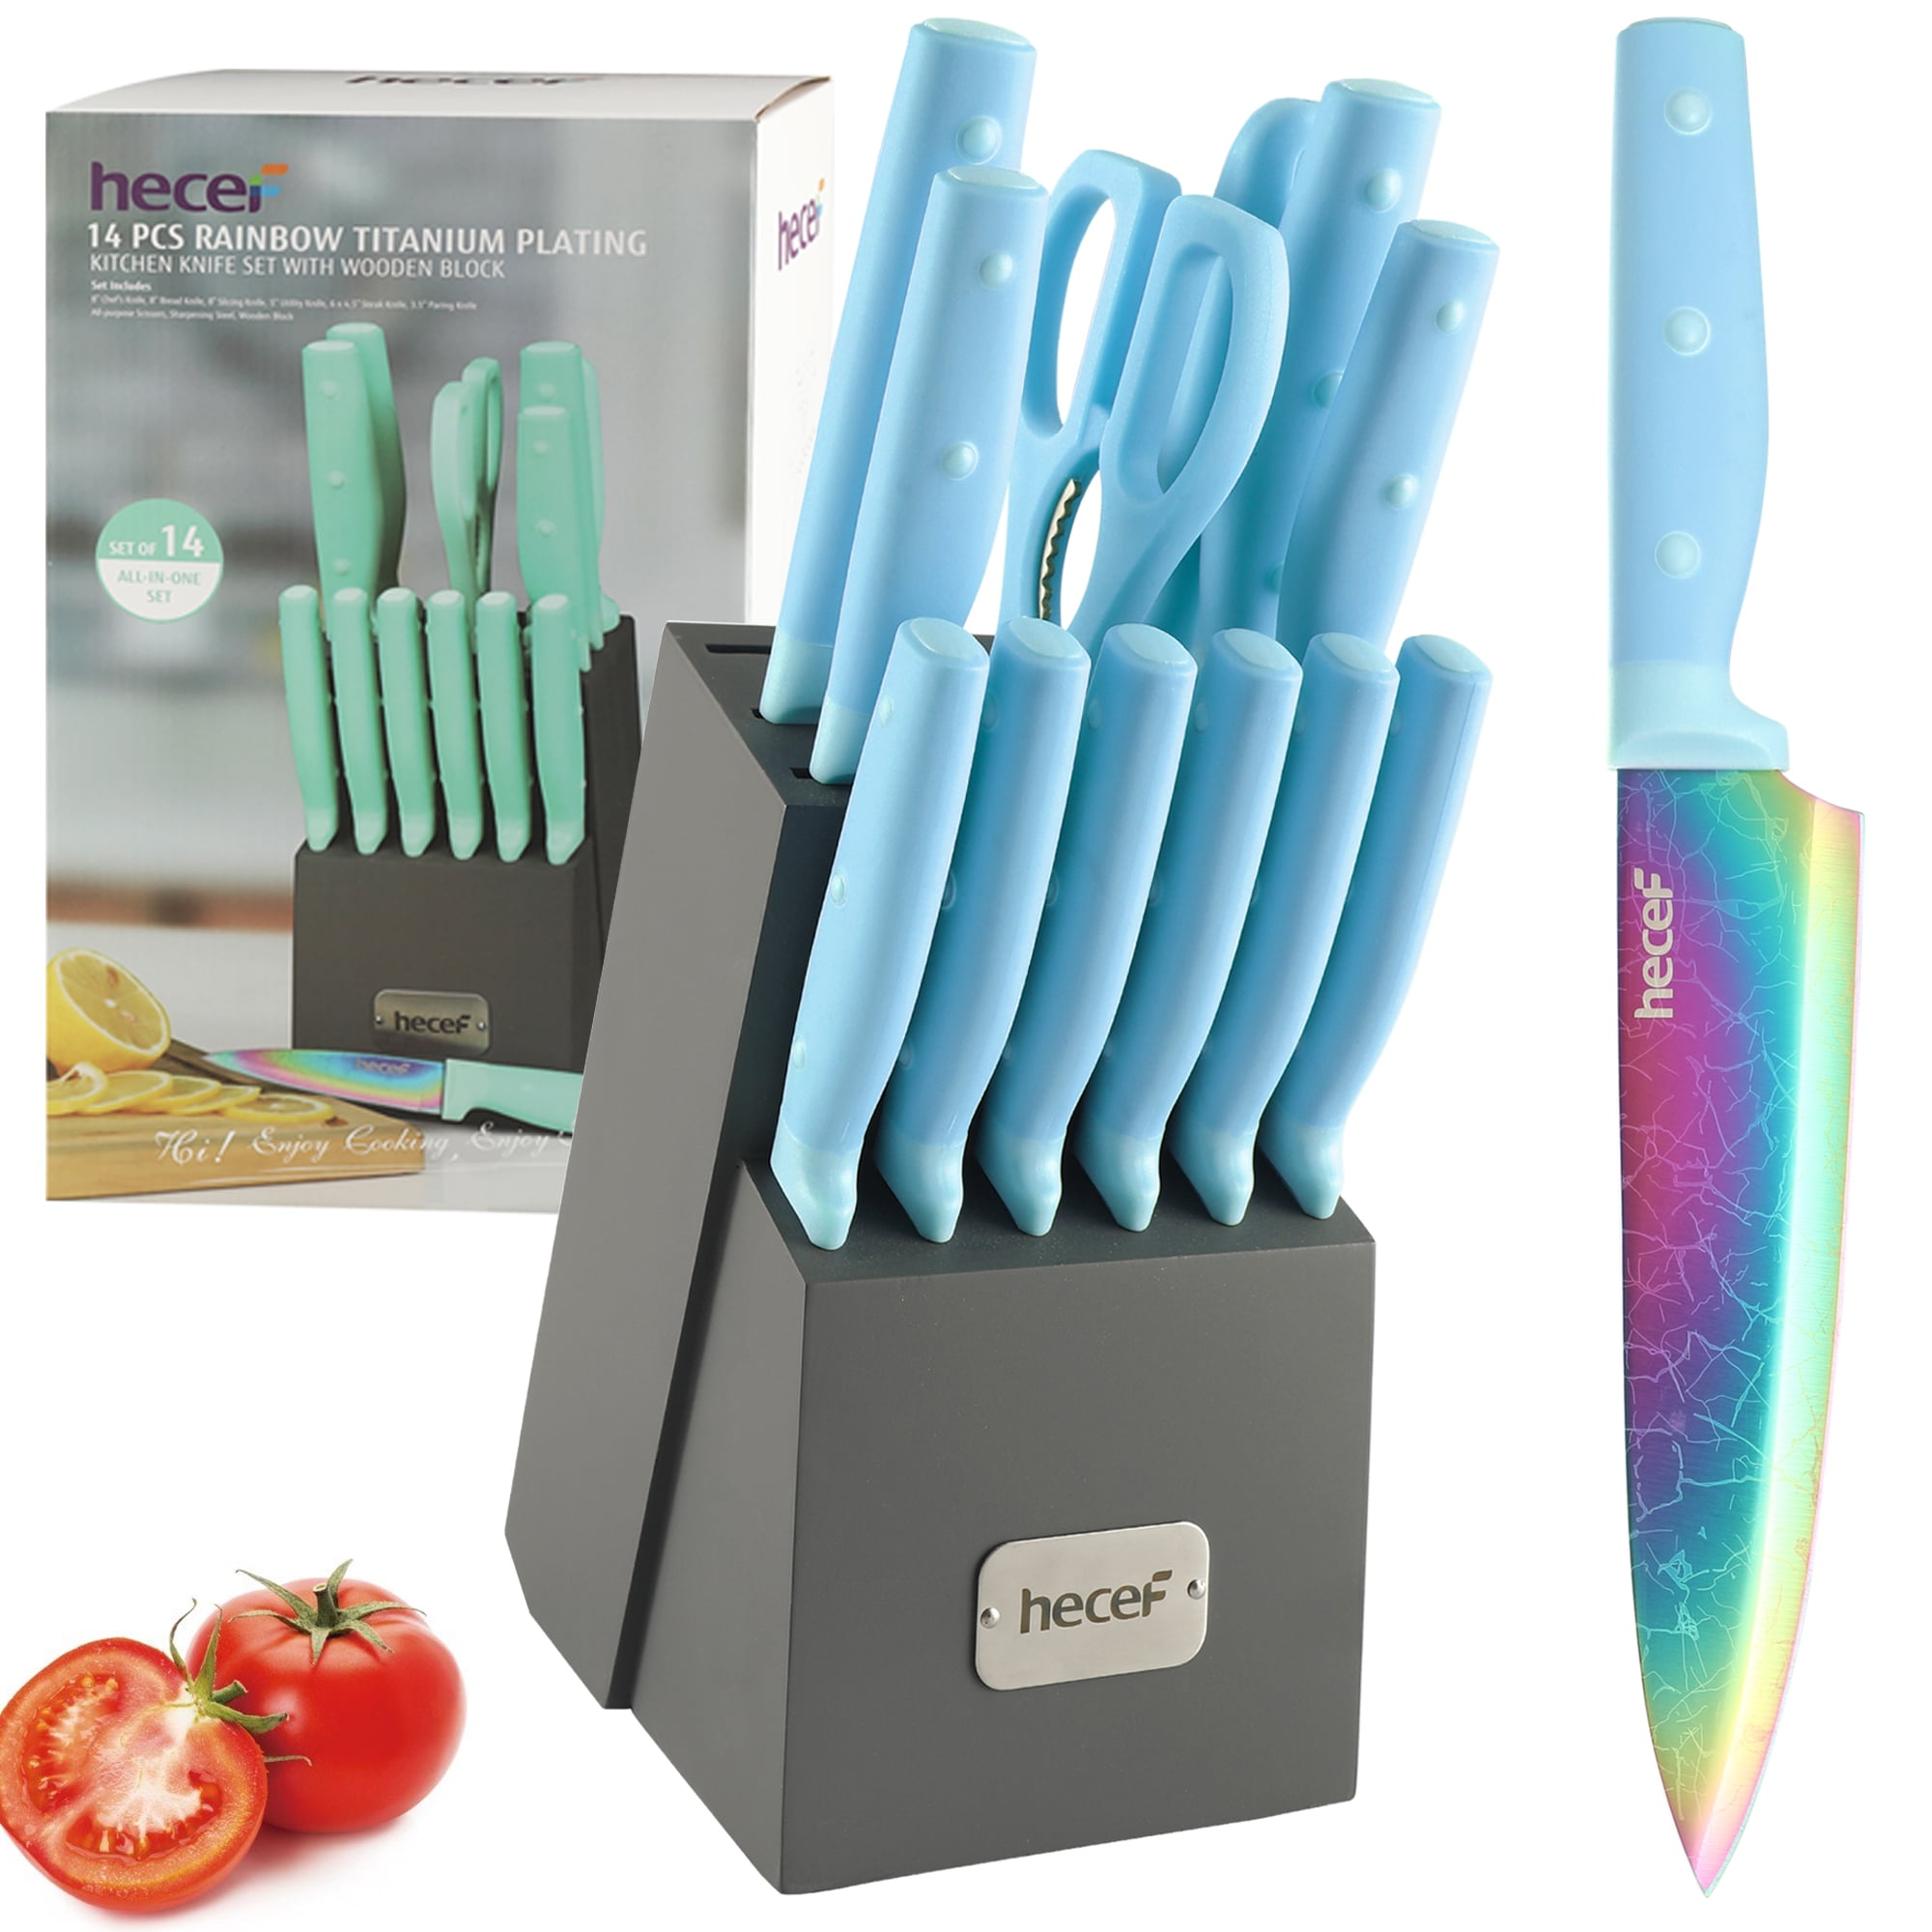 Thyme & Table 13-Piece Knife Block Set, Rainbow Blades 